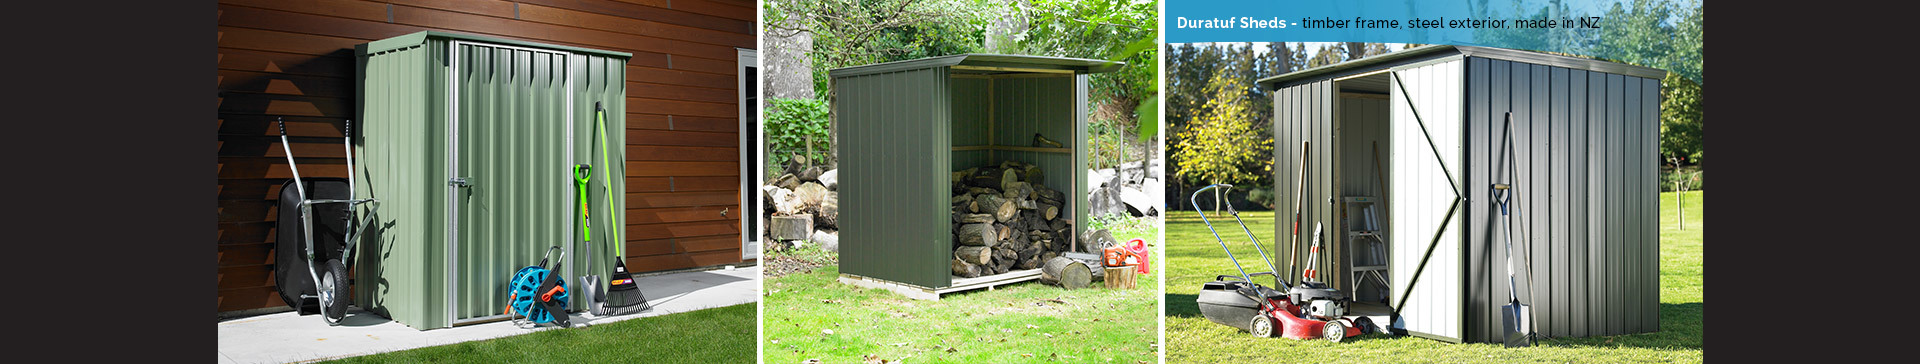 Garden sheds New Zealand, Tool shed outdoor fireplace NZ 